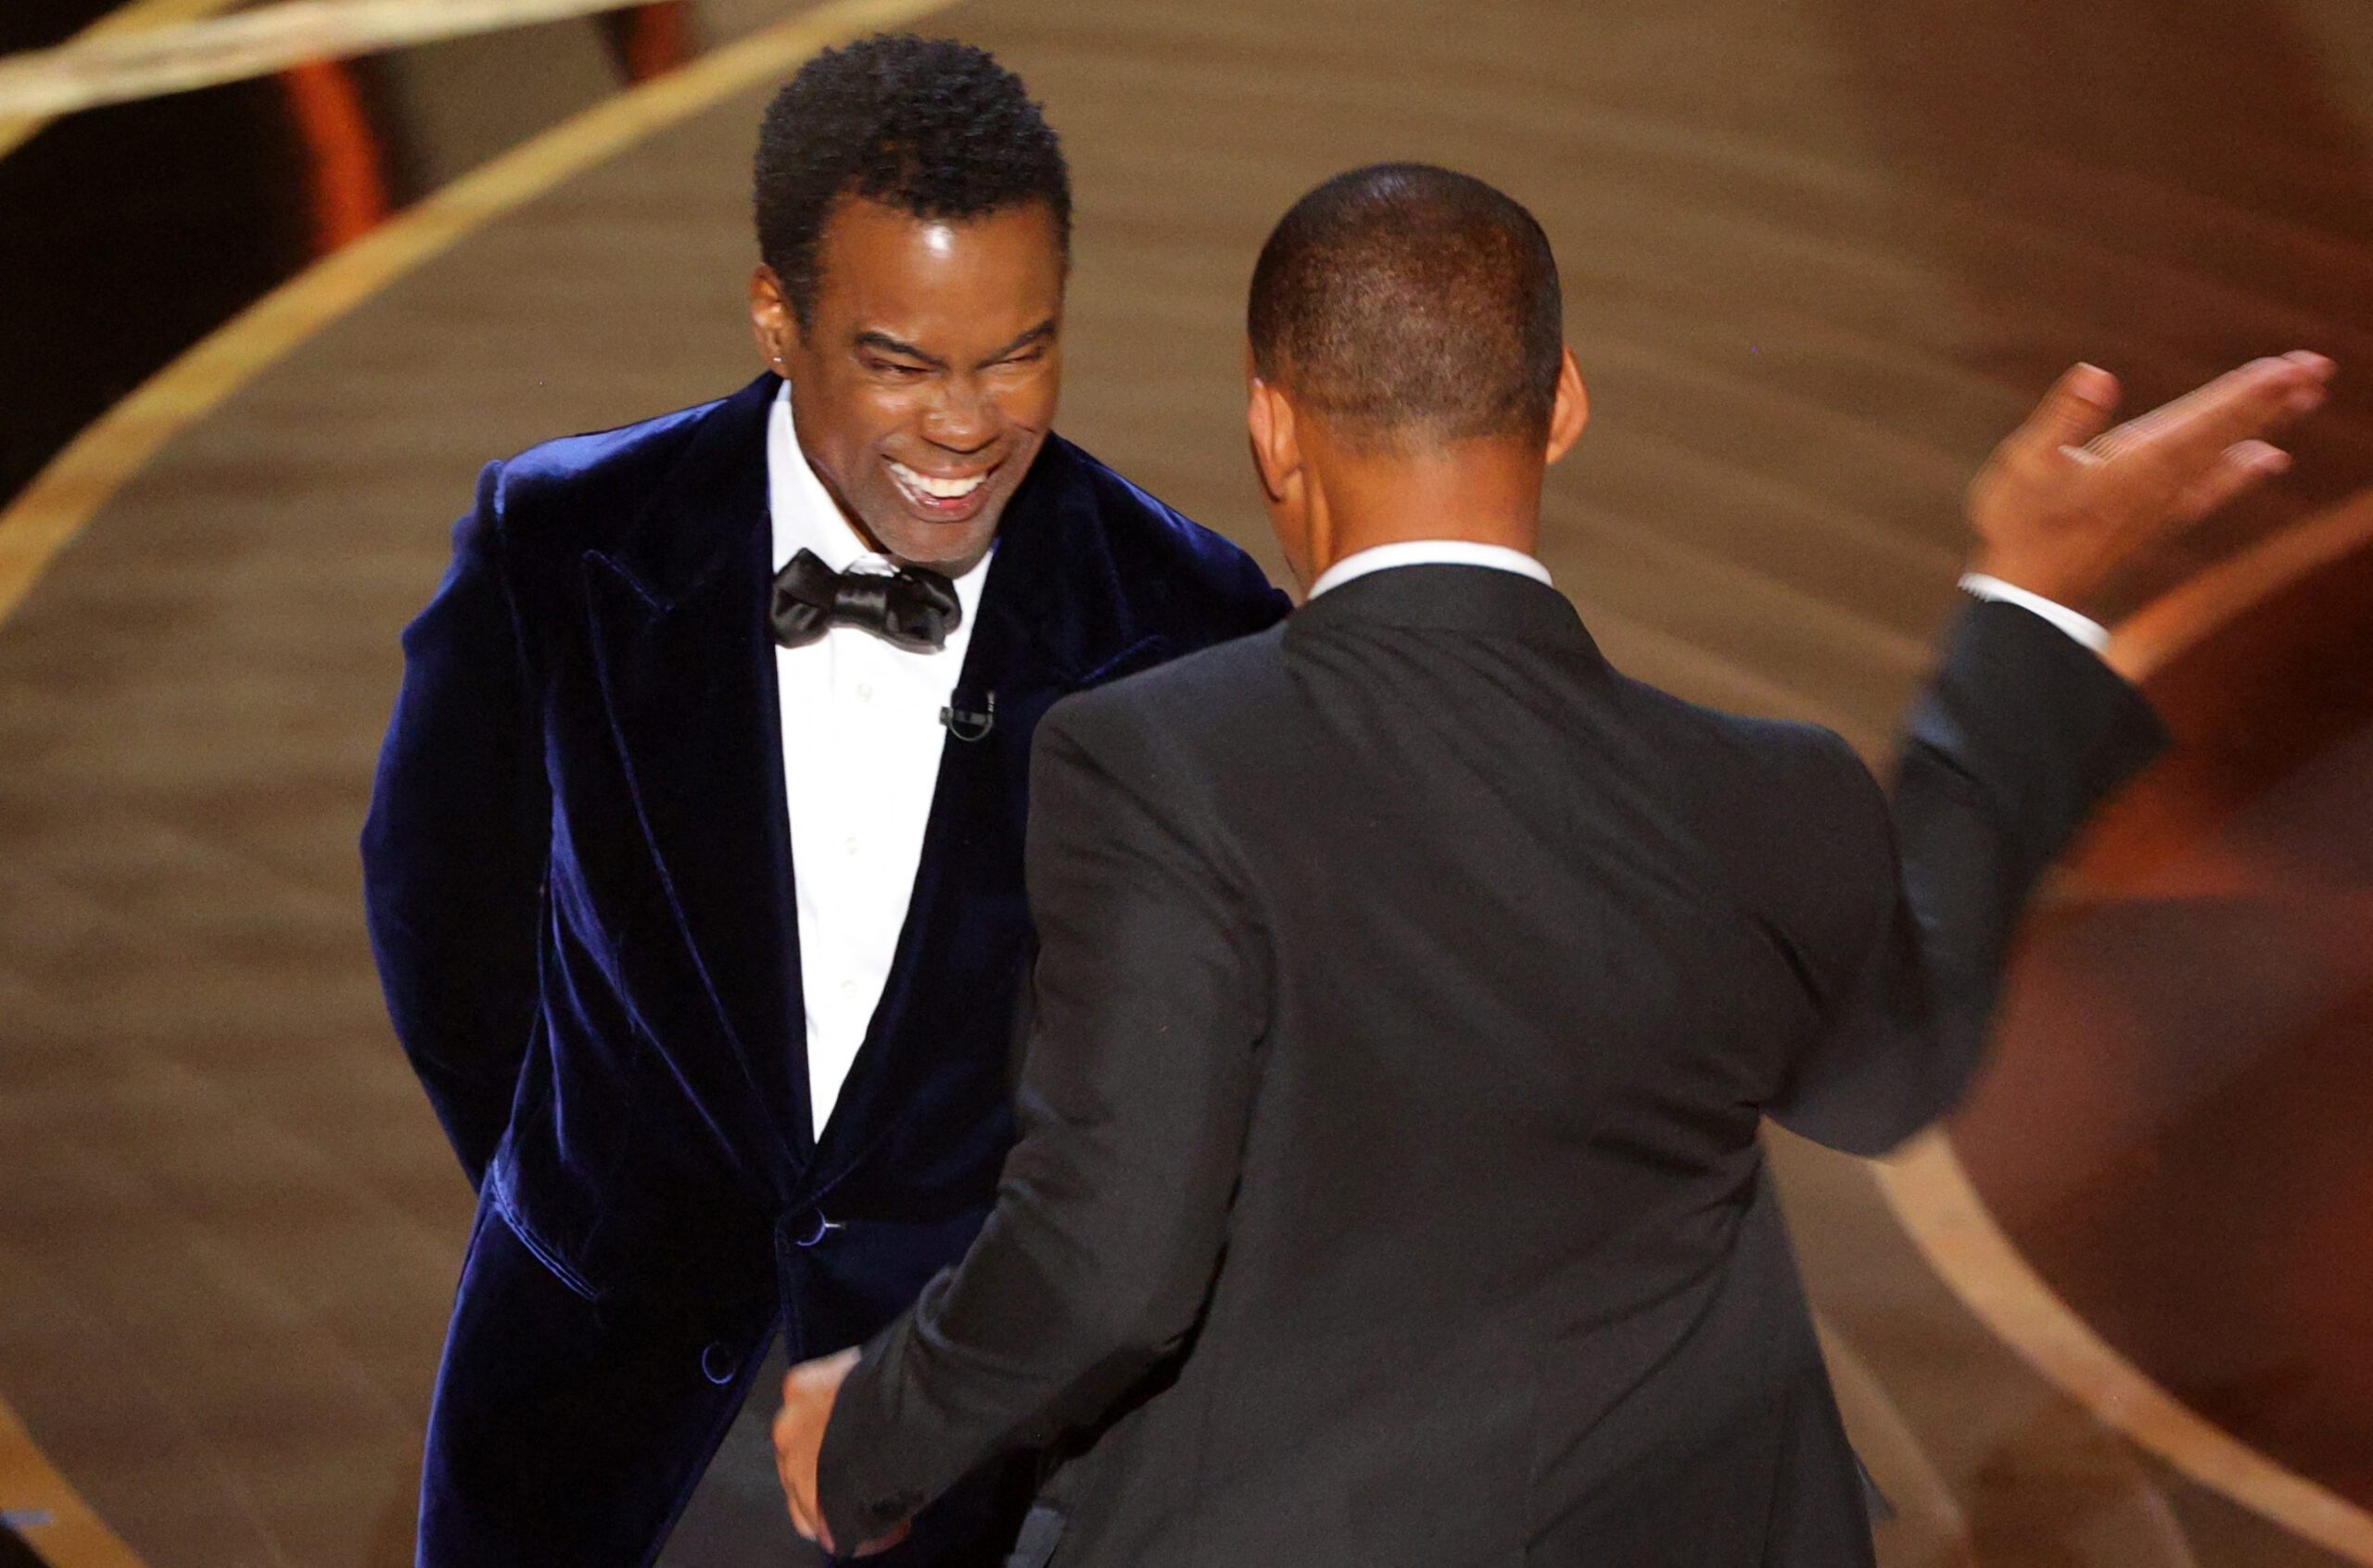 Chris Rock ‘still processing’ slap by Will Smith at Oscars